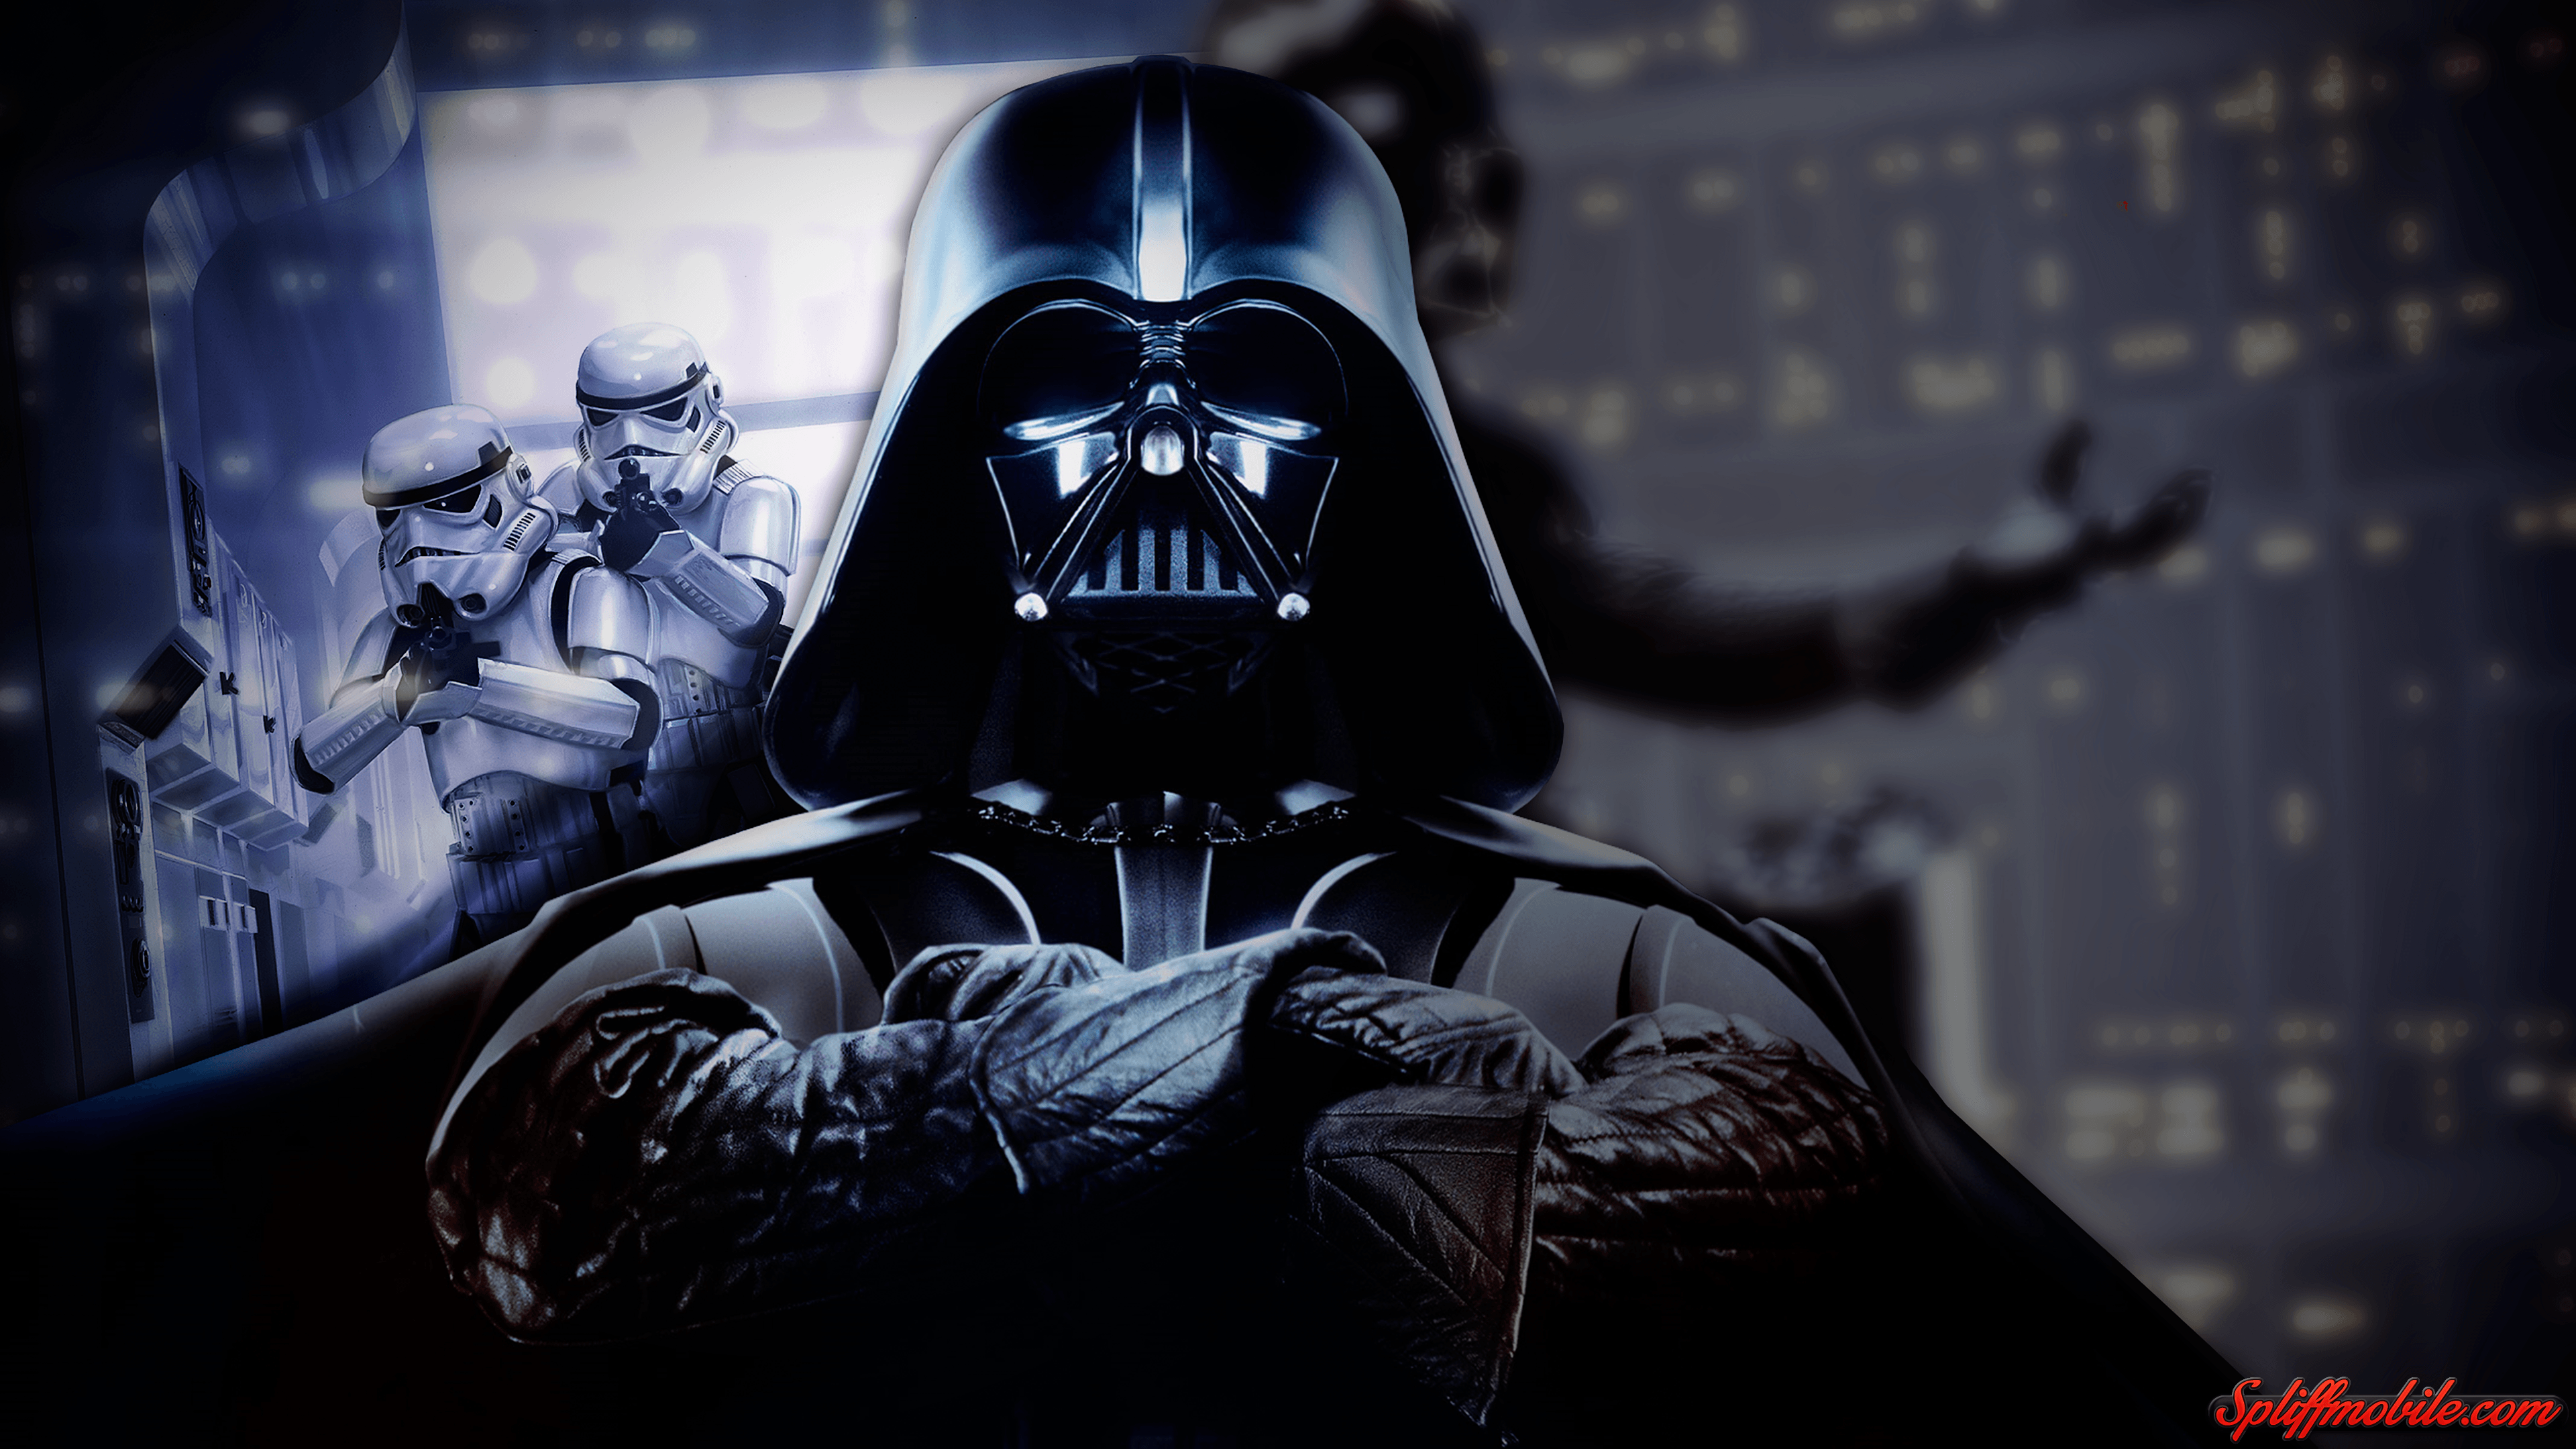 Darth Vader 1080p Wallpapers - Wallpaper Cave